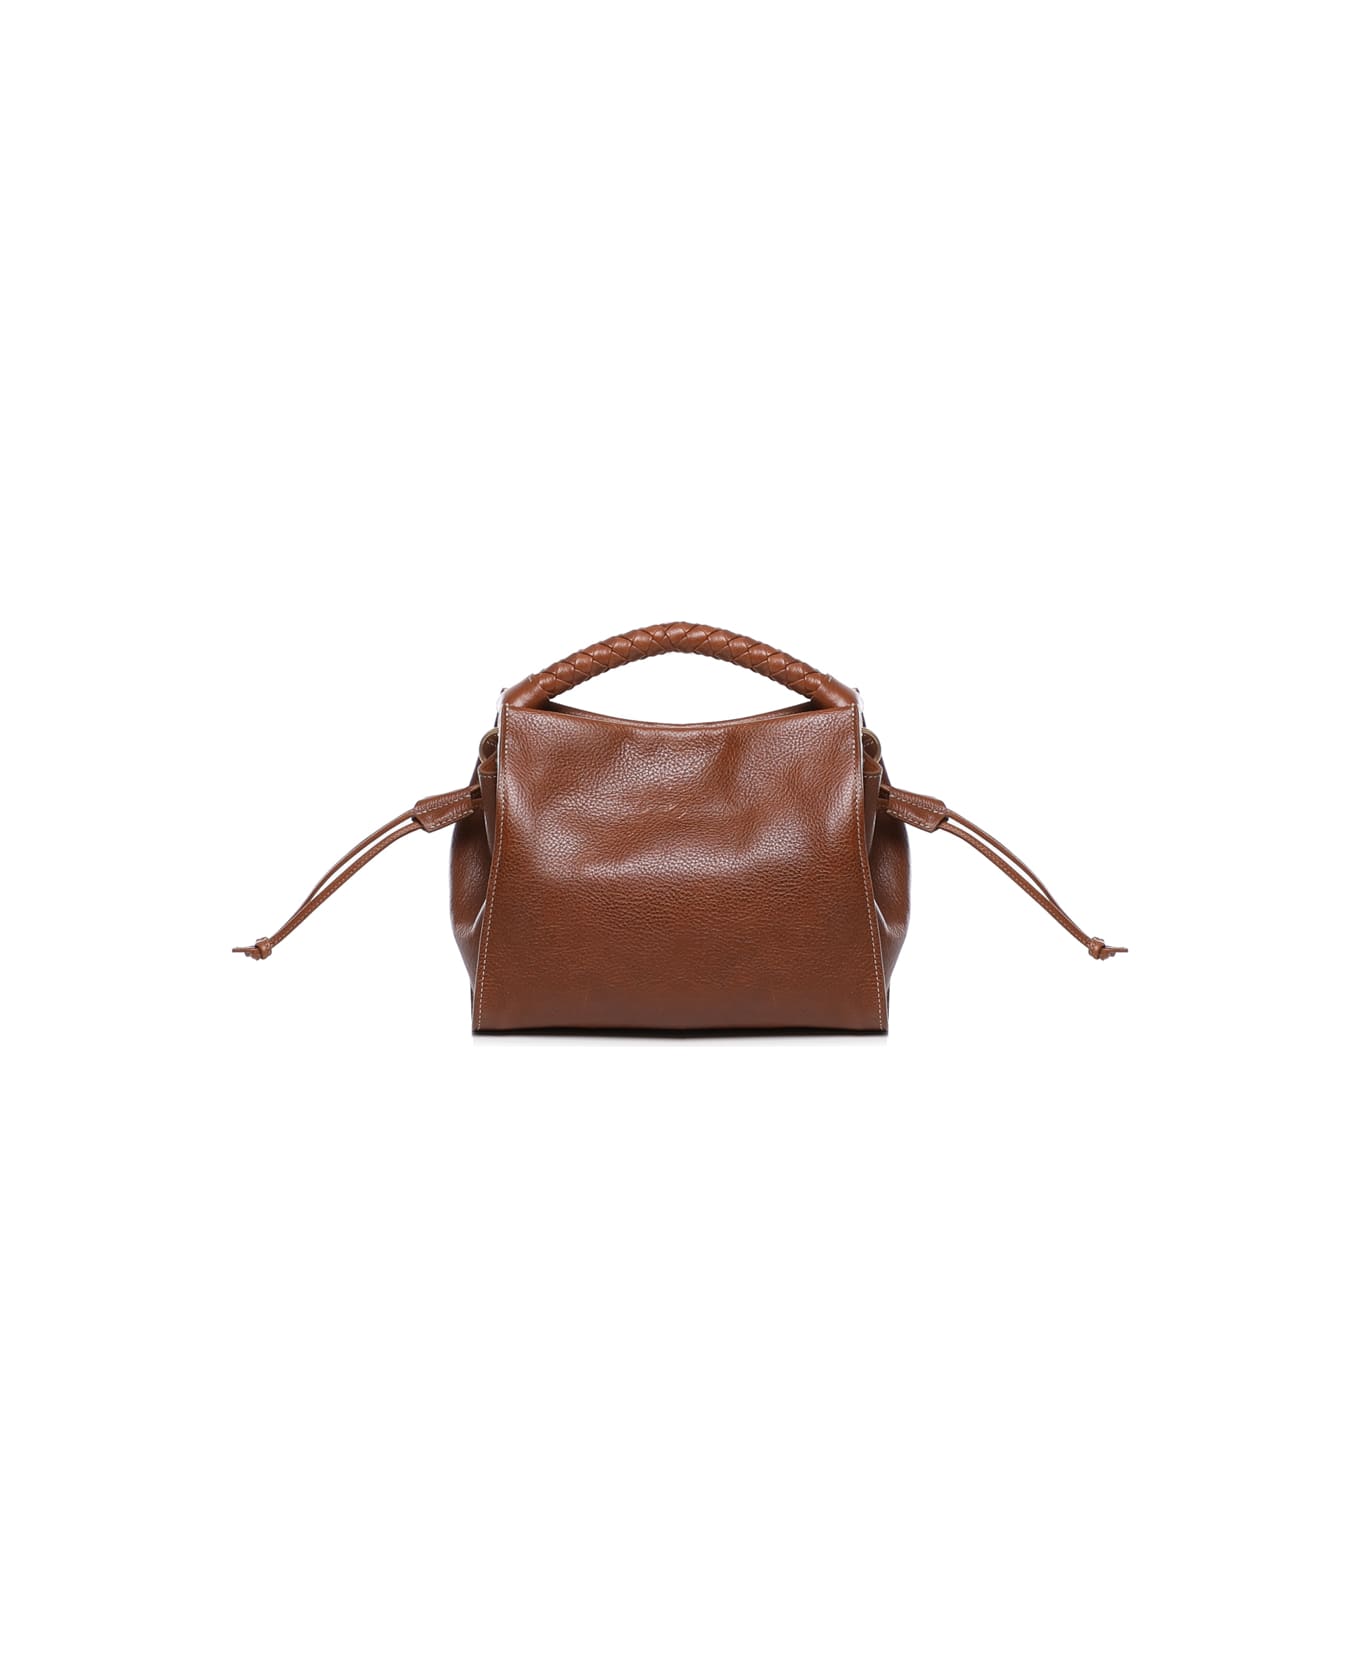 Mulberry Handbag In Cowskin - Brown トートバッグ